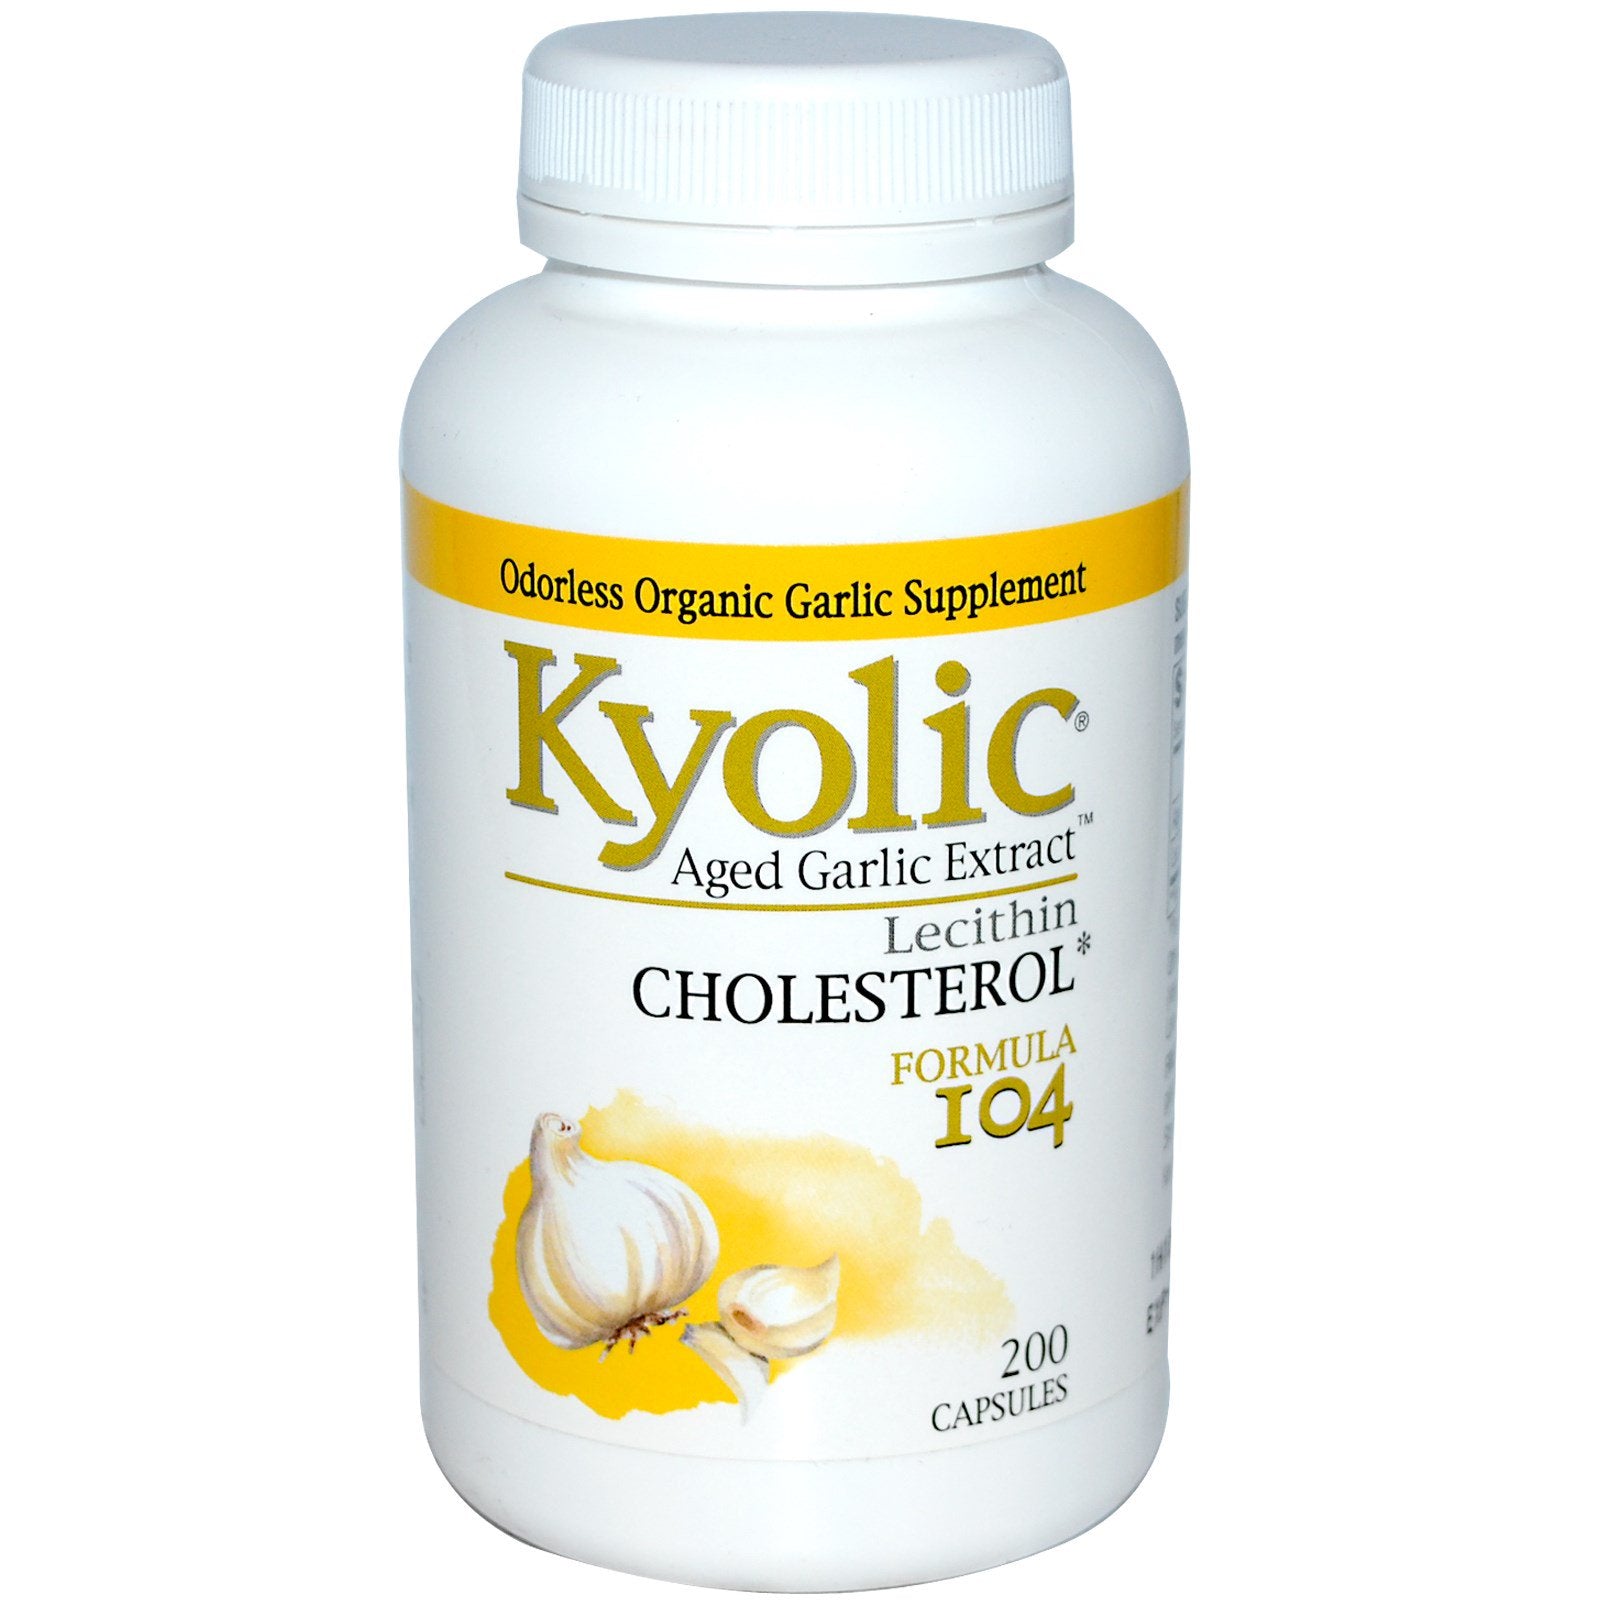 Kyolic, Aged Garlic Extract with Lecithin, 200 Capsules